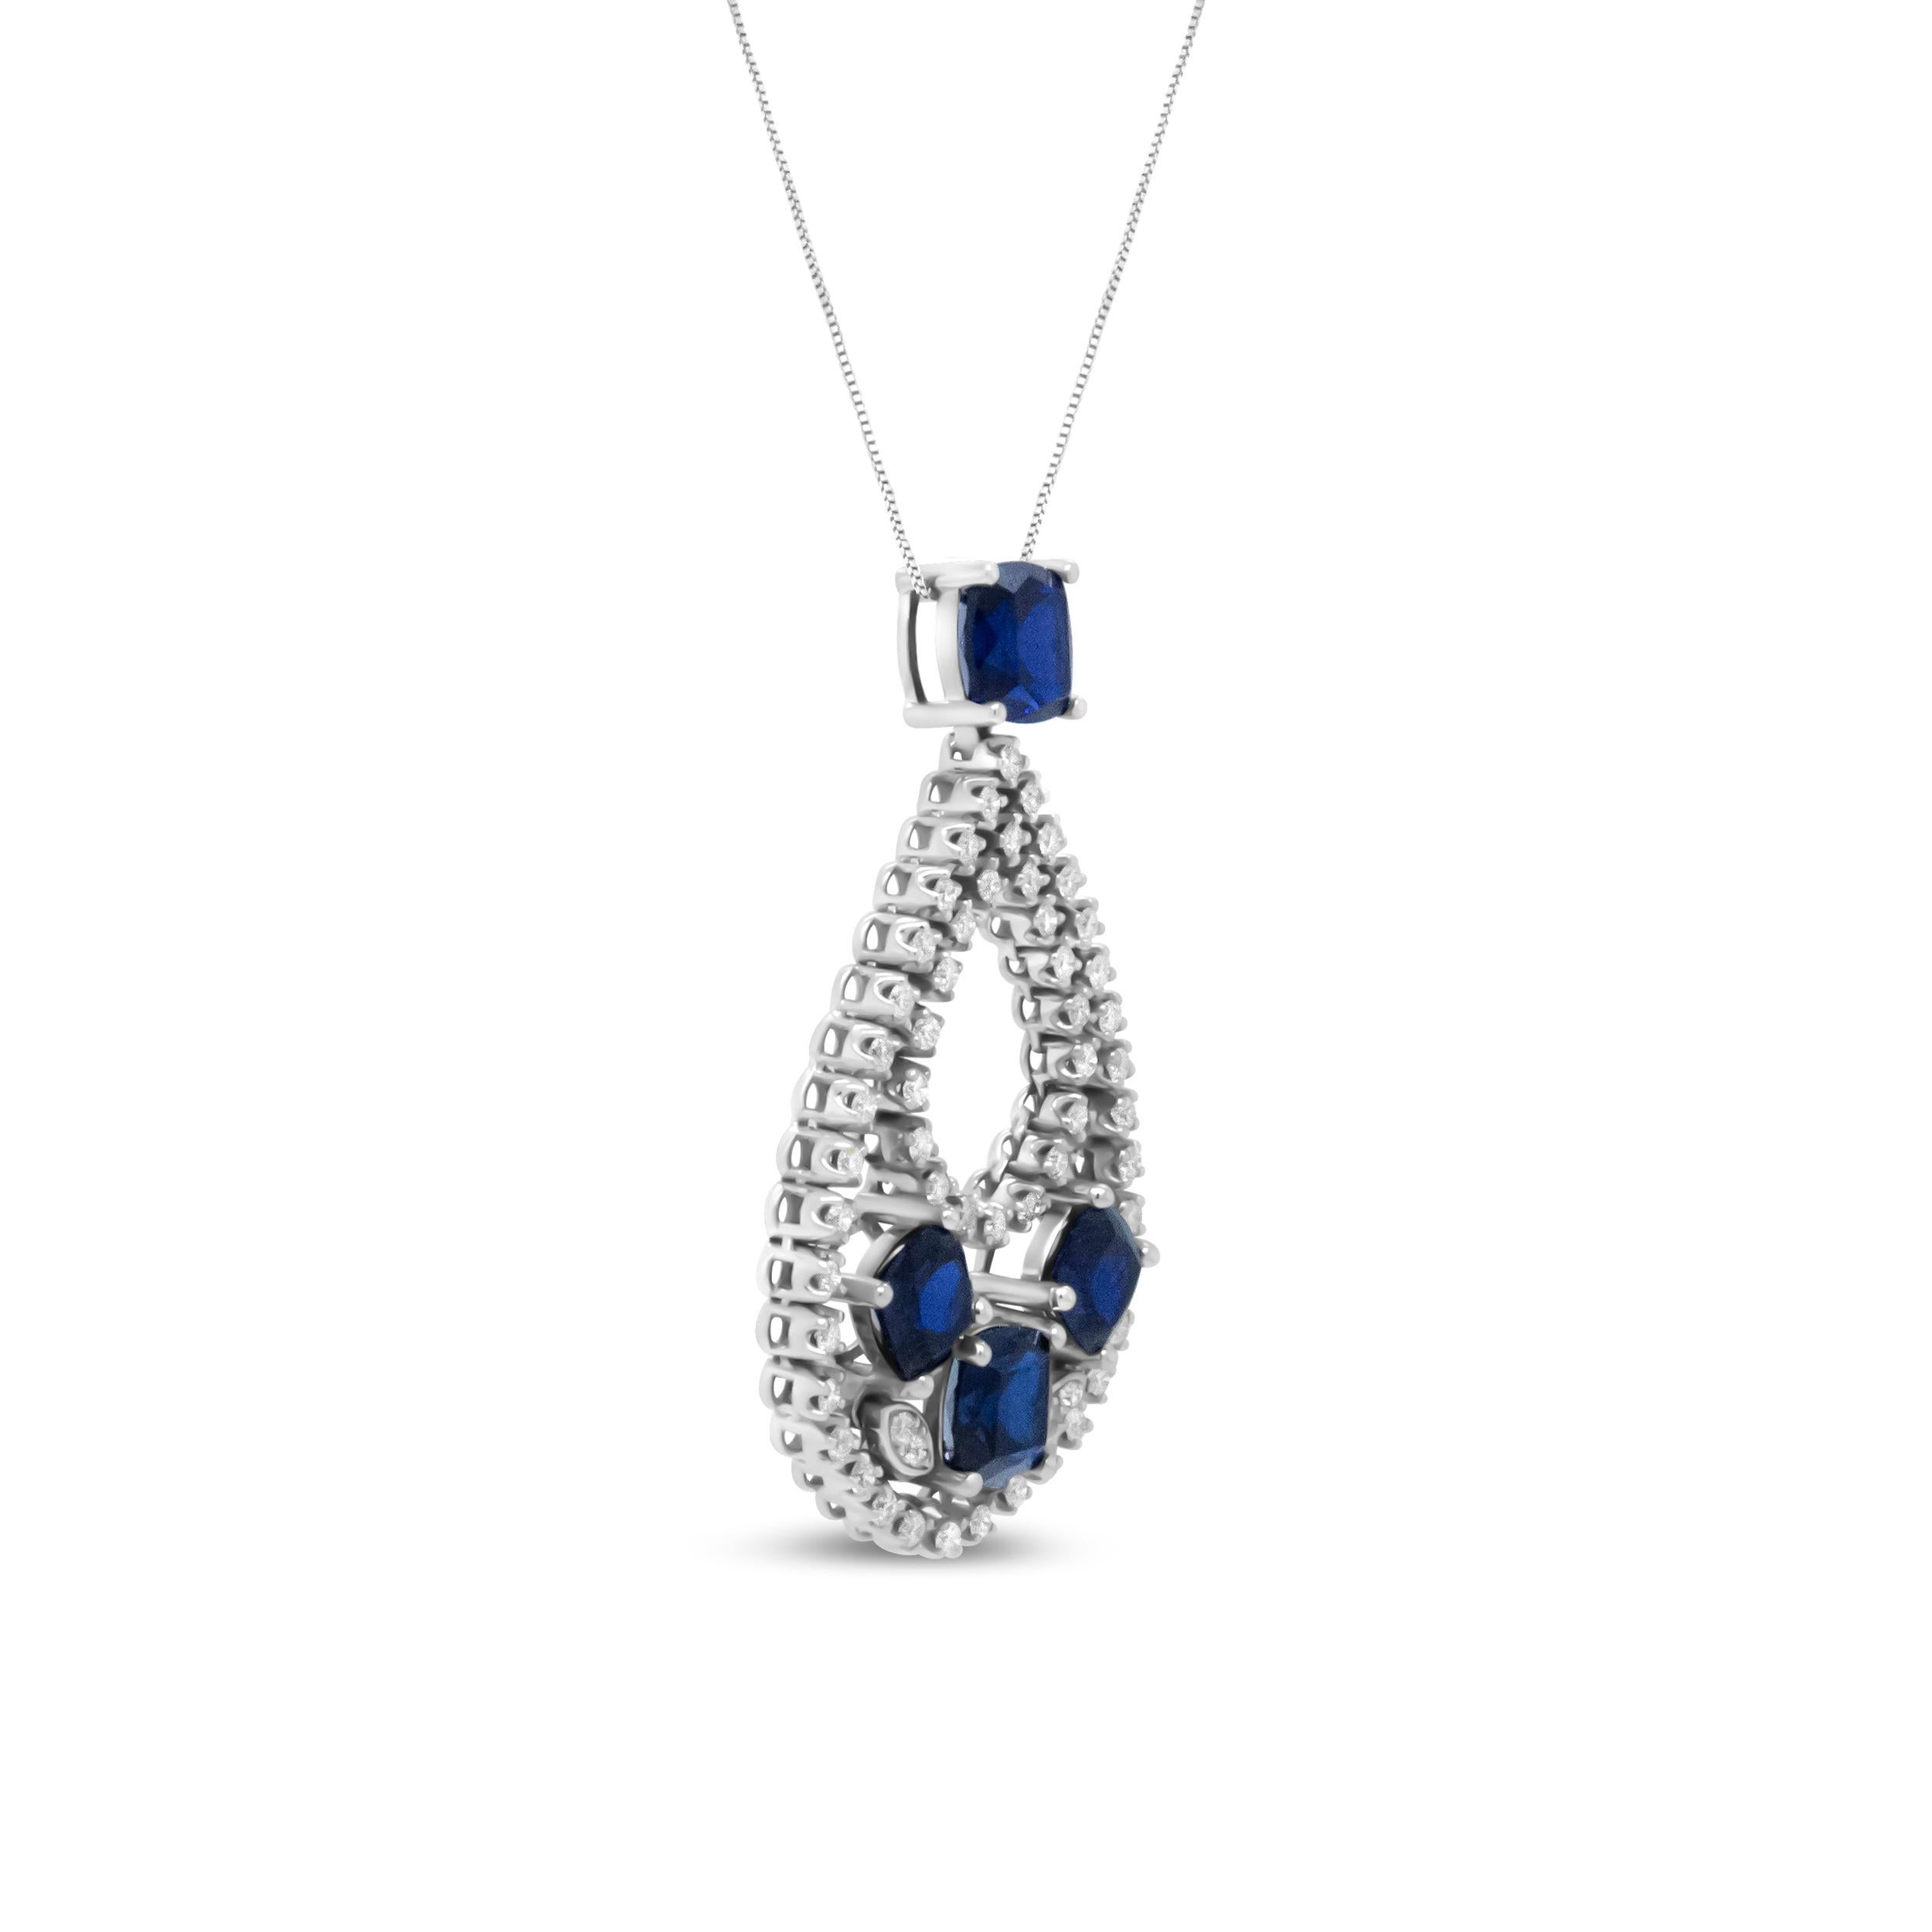 Contemporary 18K White Gold 1.0 Carat Diamond and Blue Sapphire Openwork Pendant Necklace